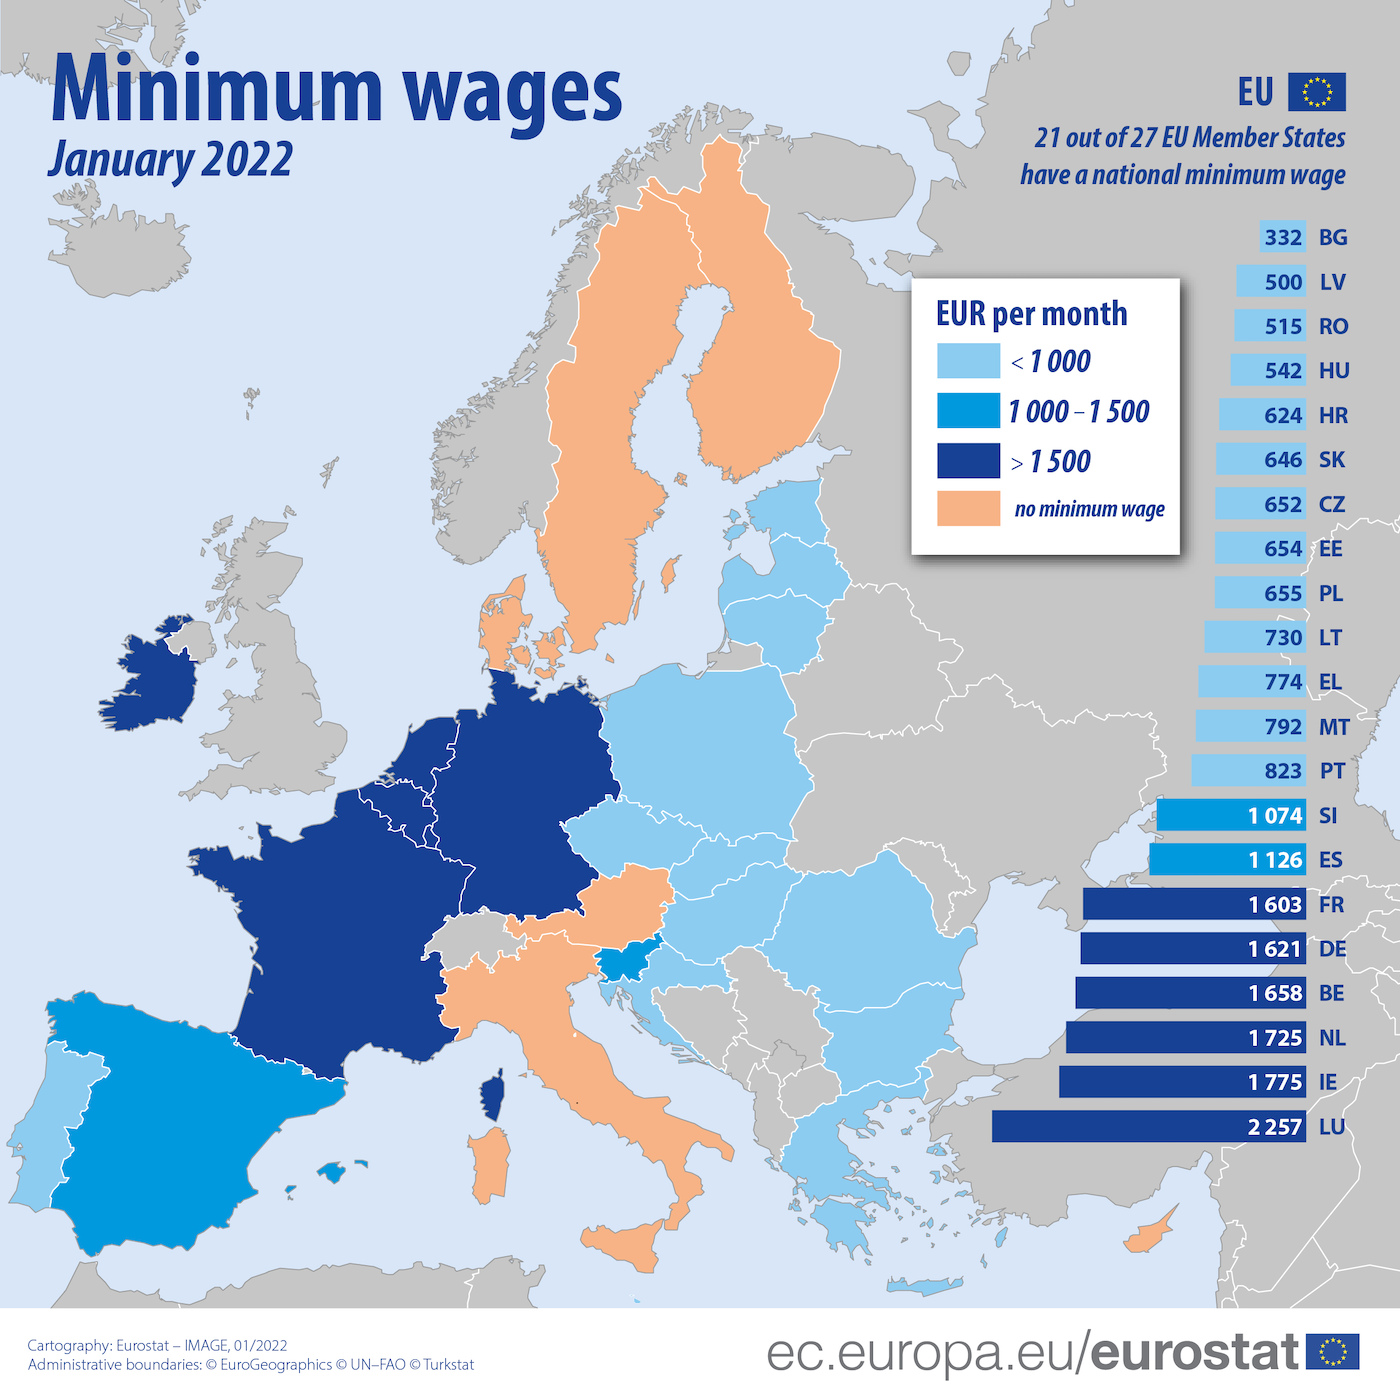 EU Map: minimum wages, January 2022